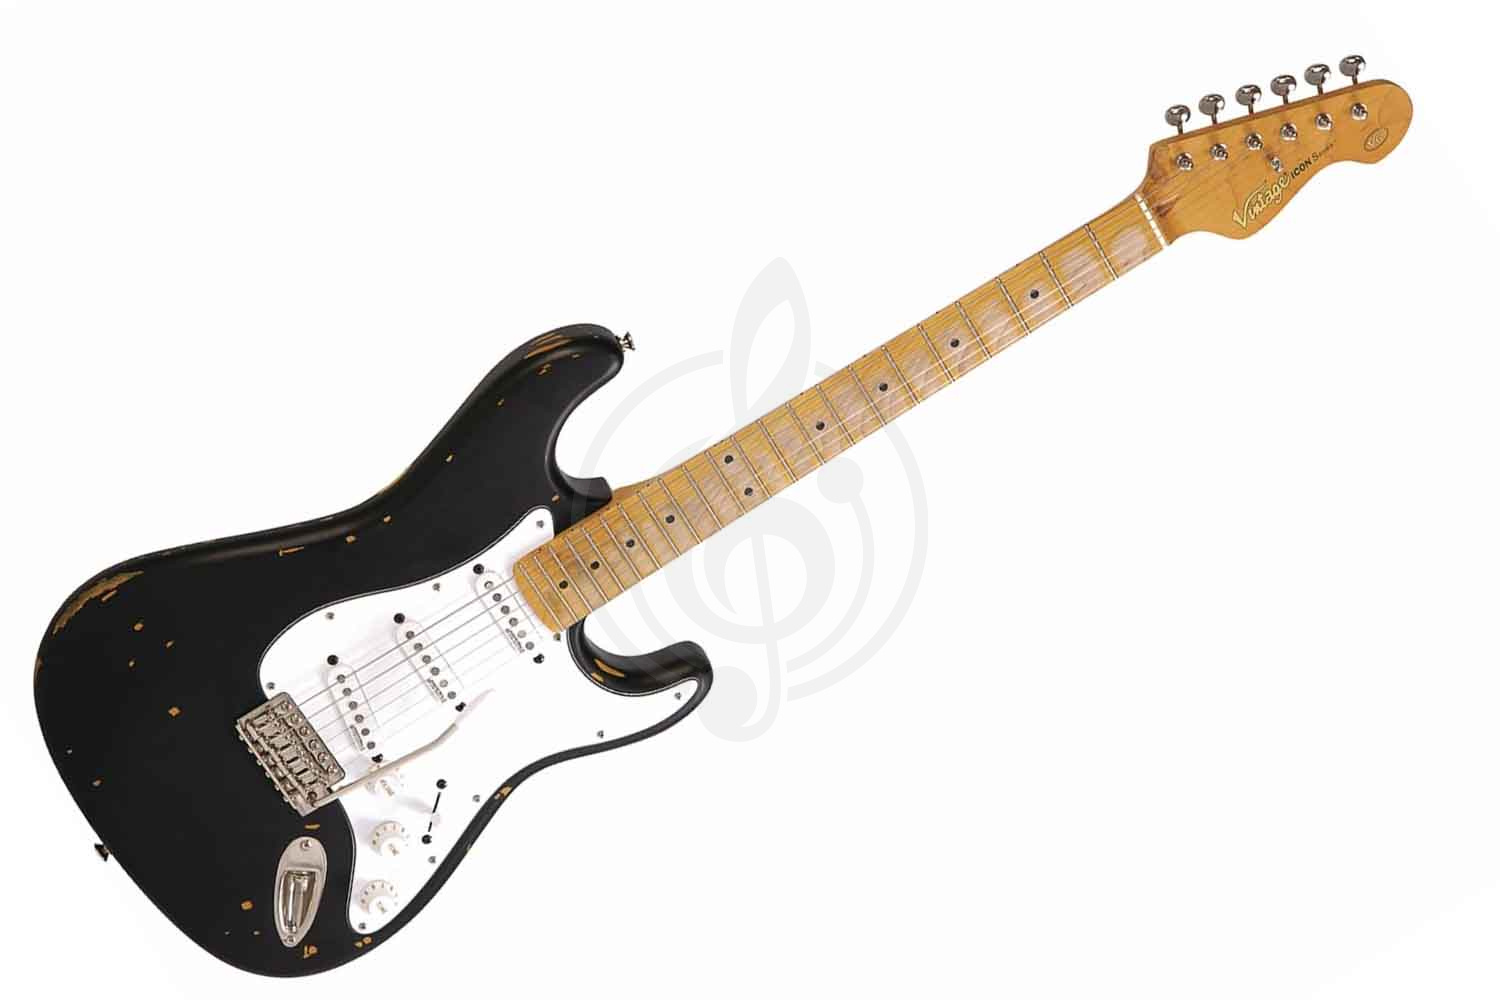 Электрогитара Stratocaster Электрогитары Stratocaster Vintage Vintage V6MRBK - Электрогитара типа Stratocaster, цвет Distressed Black  V6MRBK - фото 1